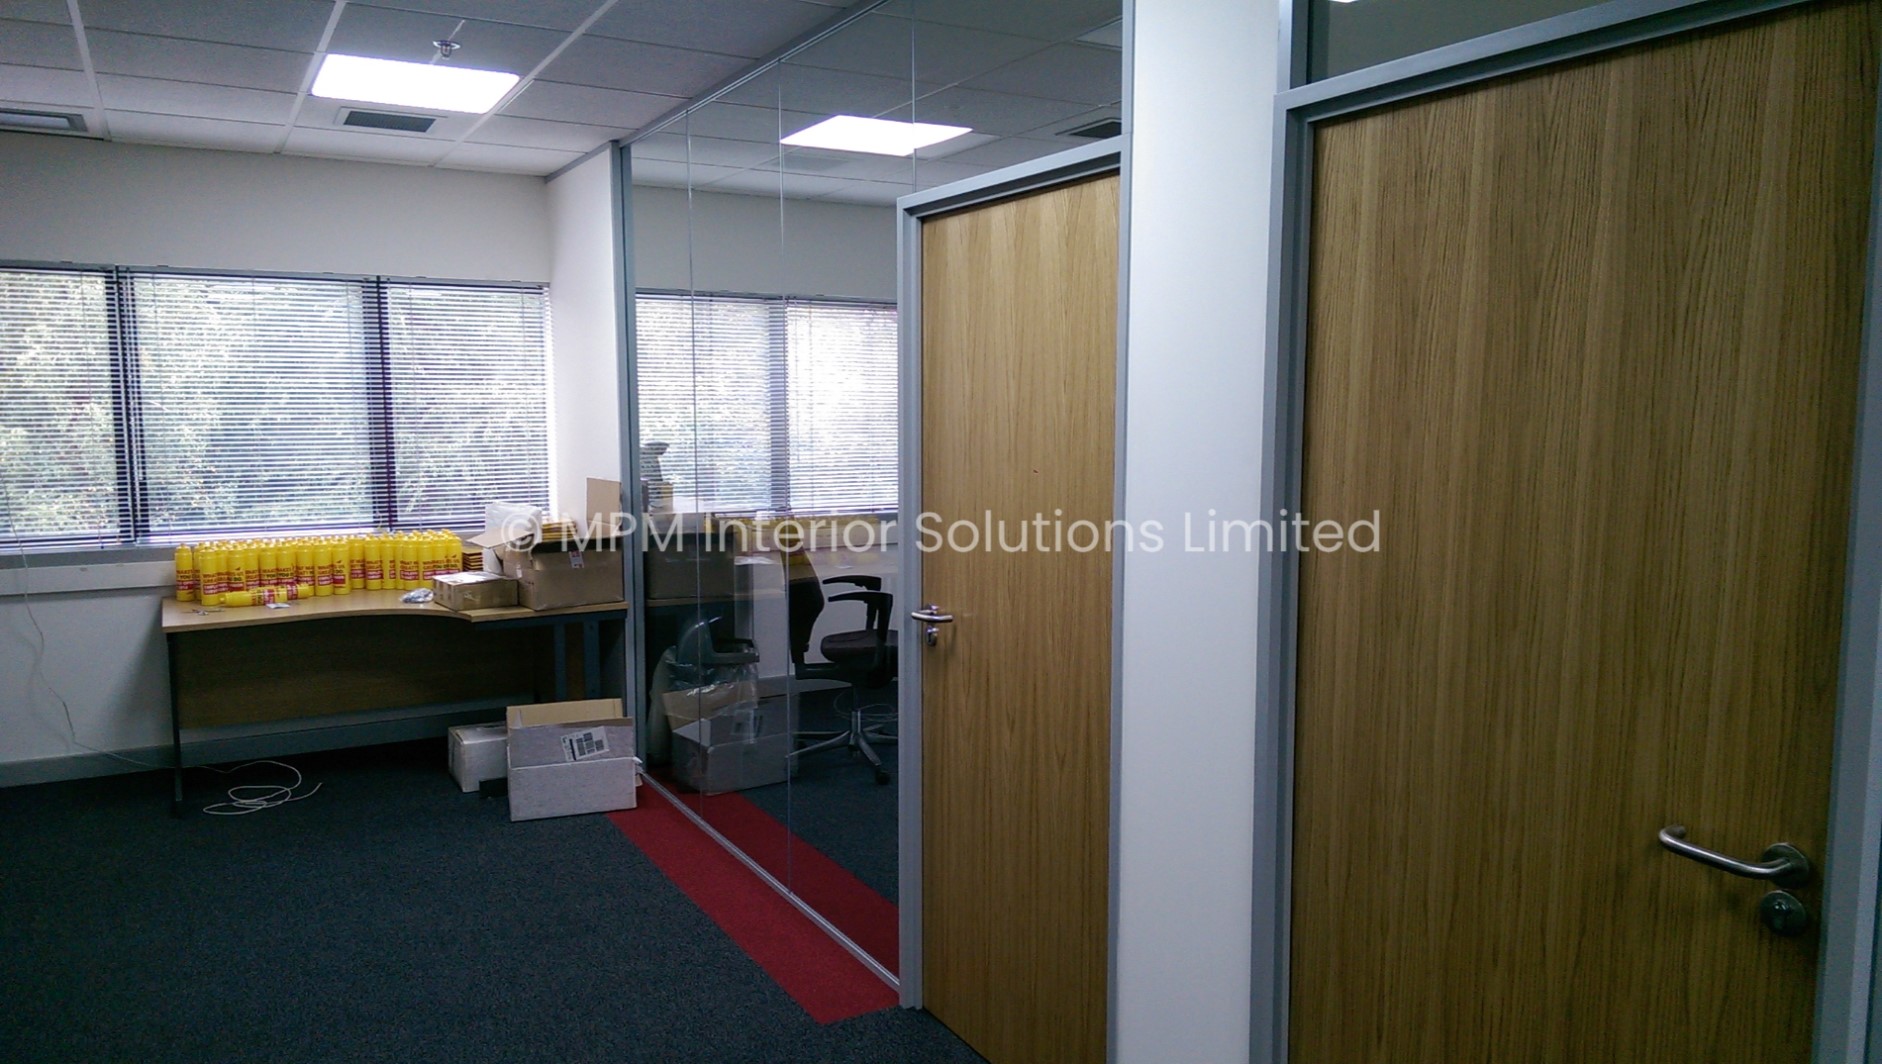 Frameless Glass Office Partitioning, 75mm > 100mm Demountable Office Partitioning, Office Refurbishment/Fit-Out, DHL International (UK) Ltd (Orbital Park, Hounslow, London), MPM Interior Solutions Limited